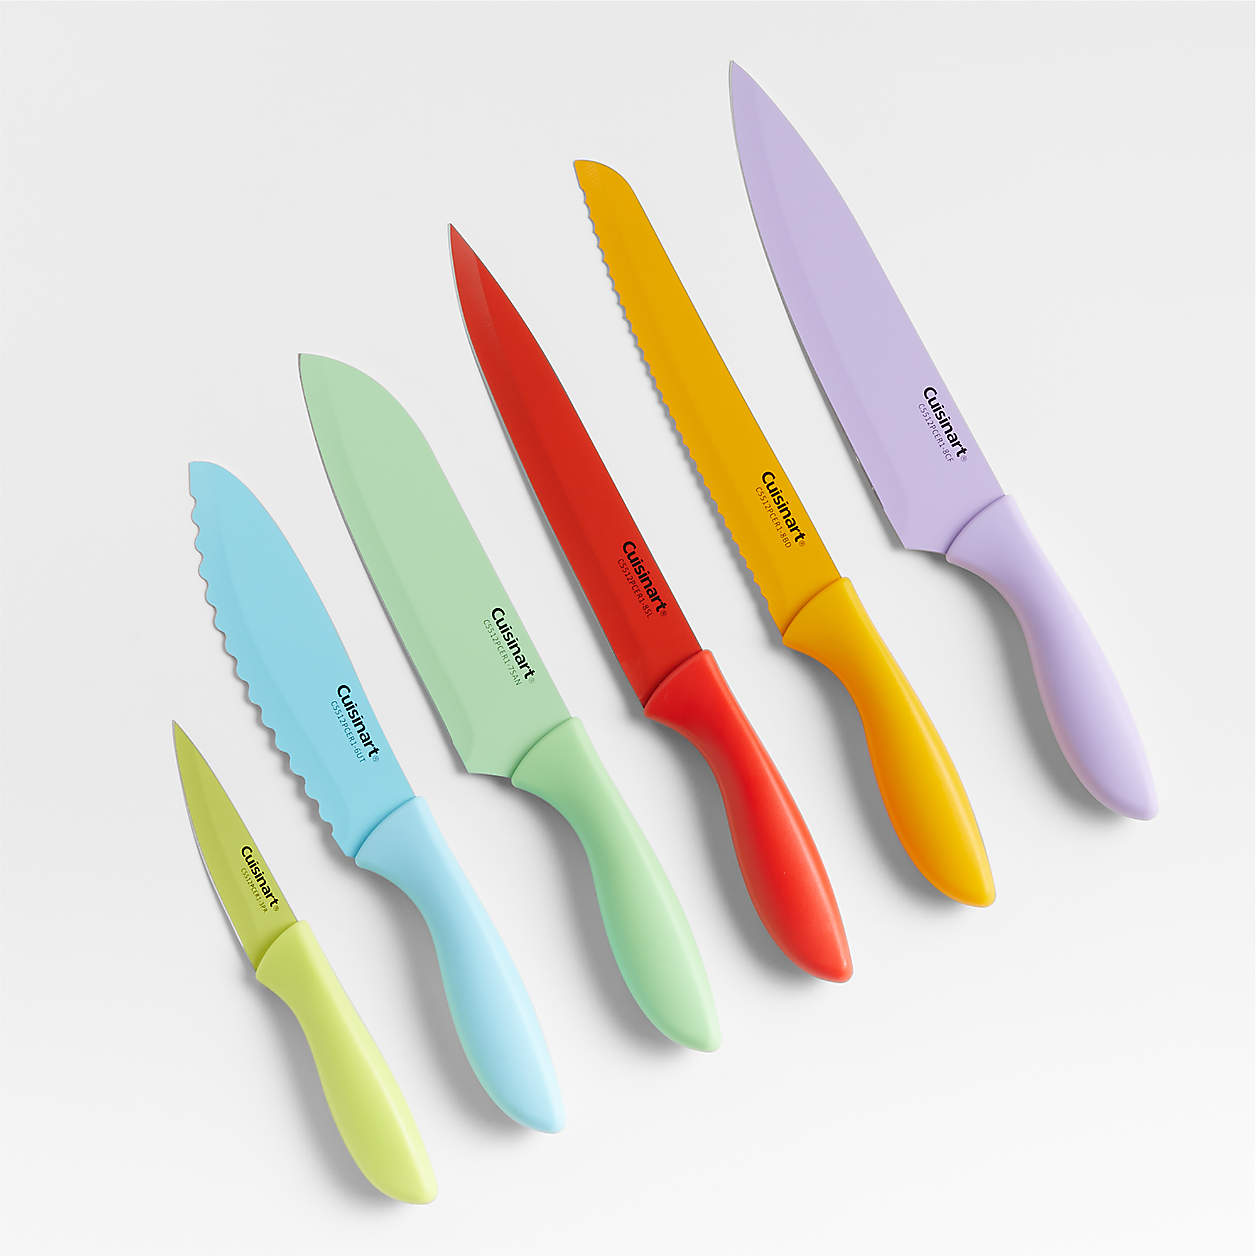 Cuisinart Advantage 12-Piece Colored Ceramic Knife Set + Reviews